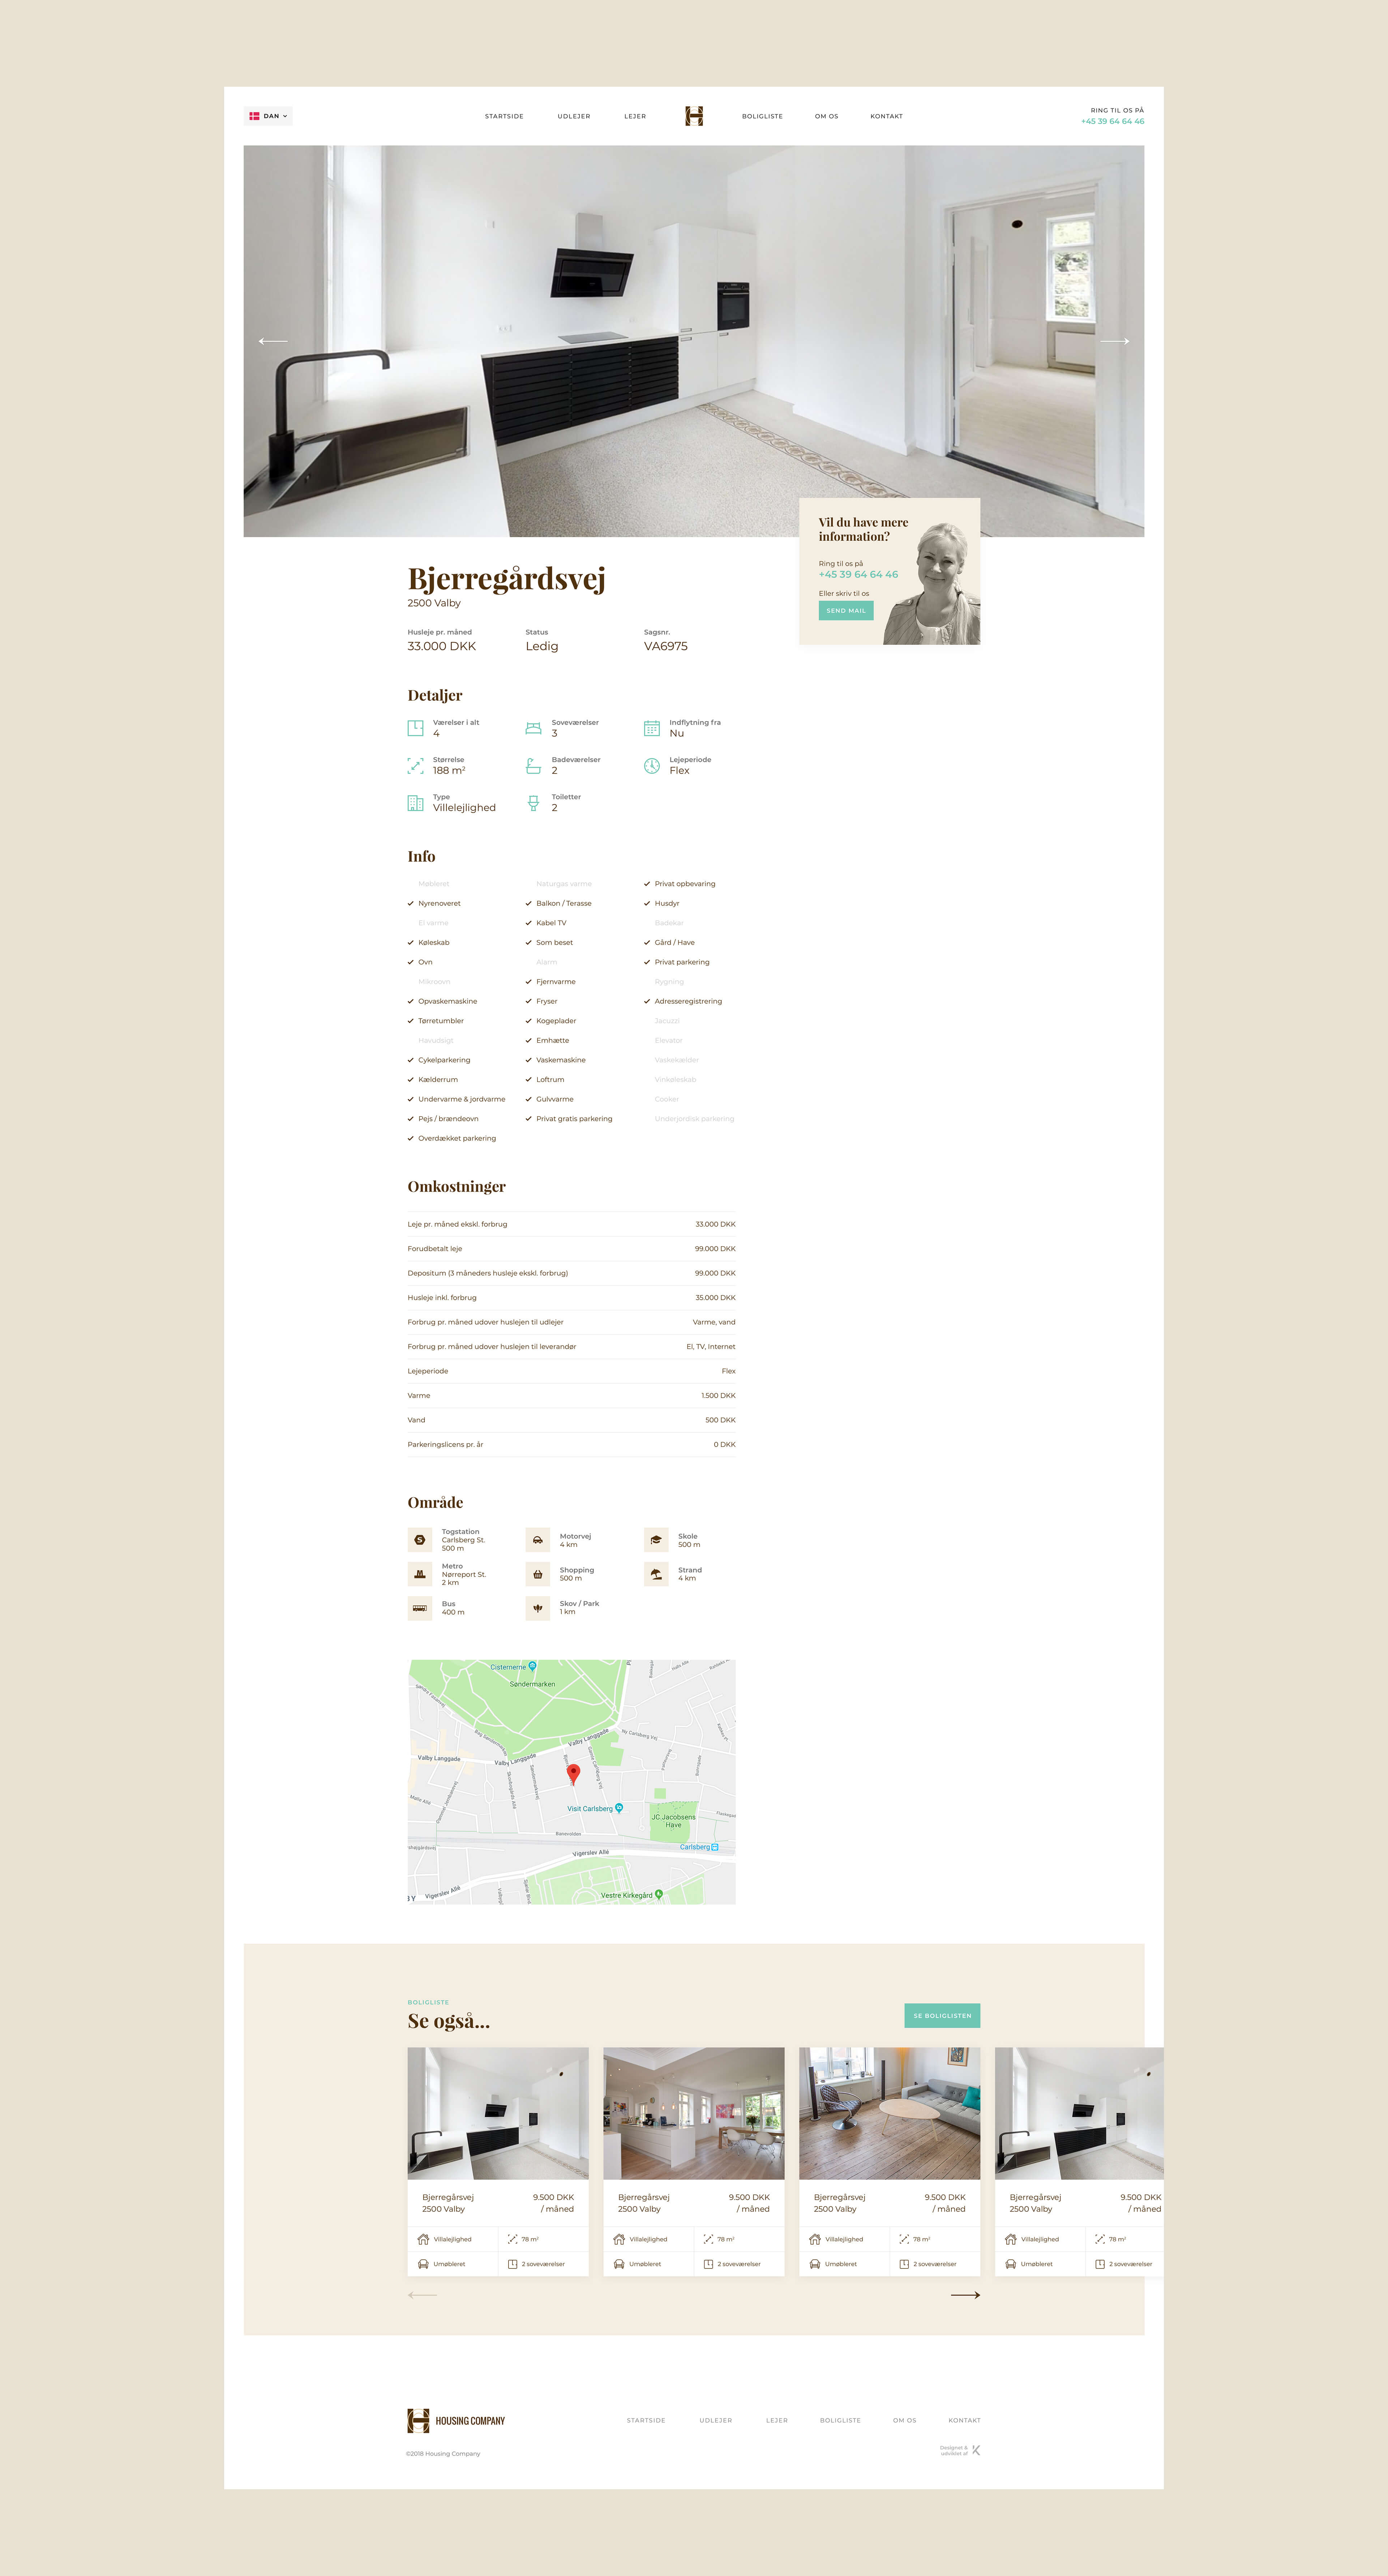 Housing Company Website - Produktside